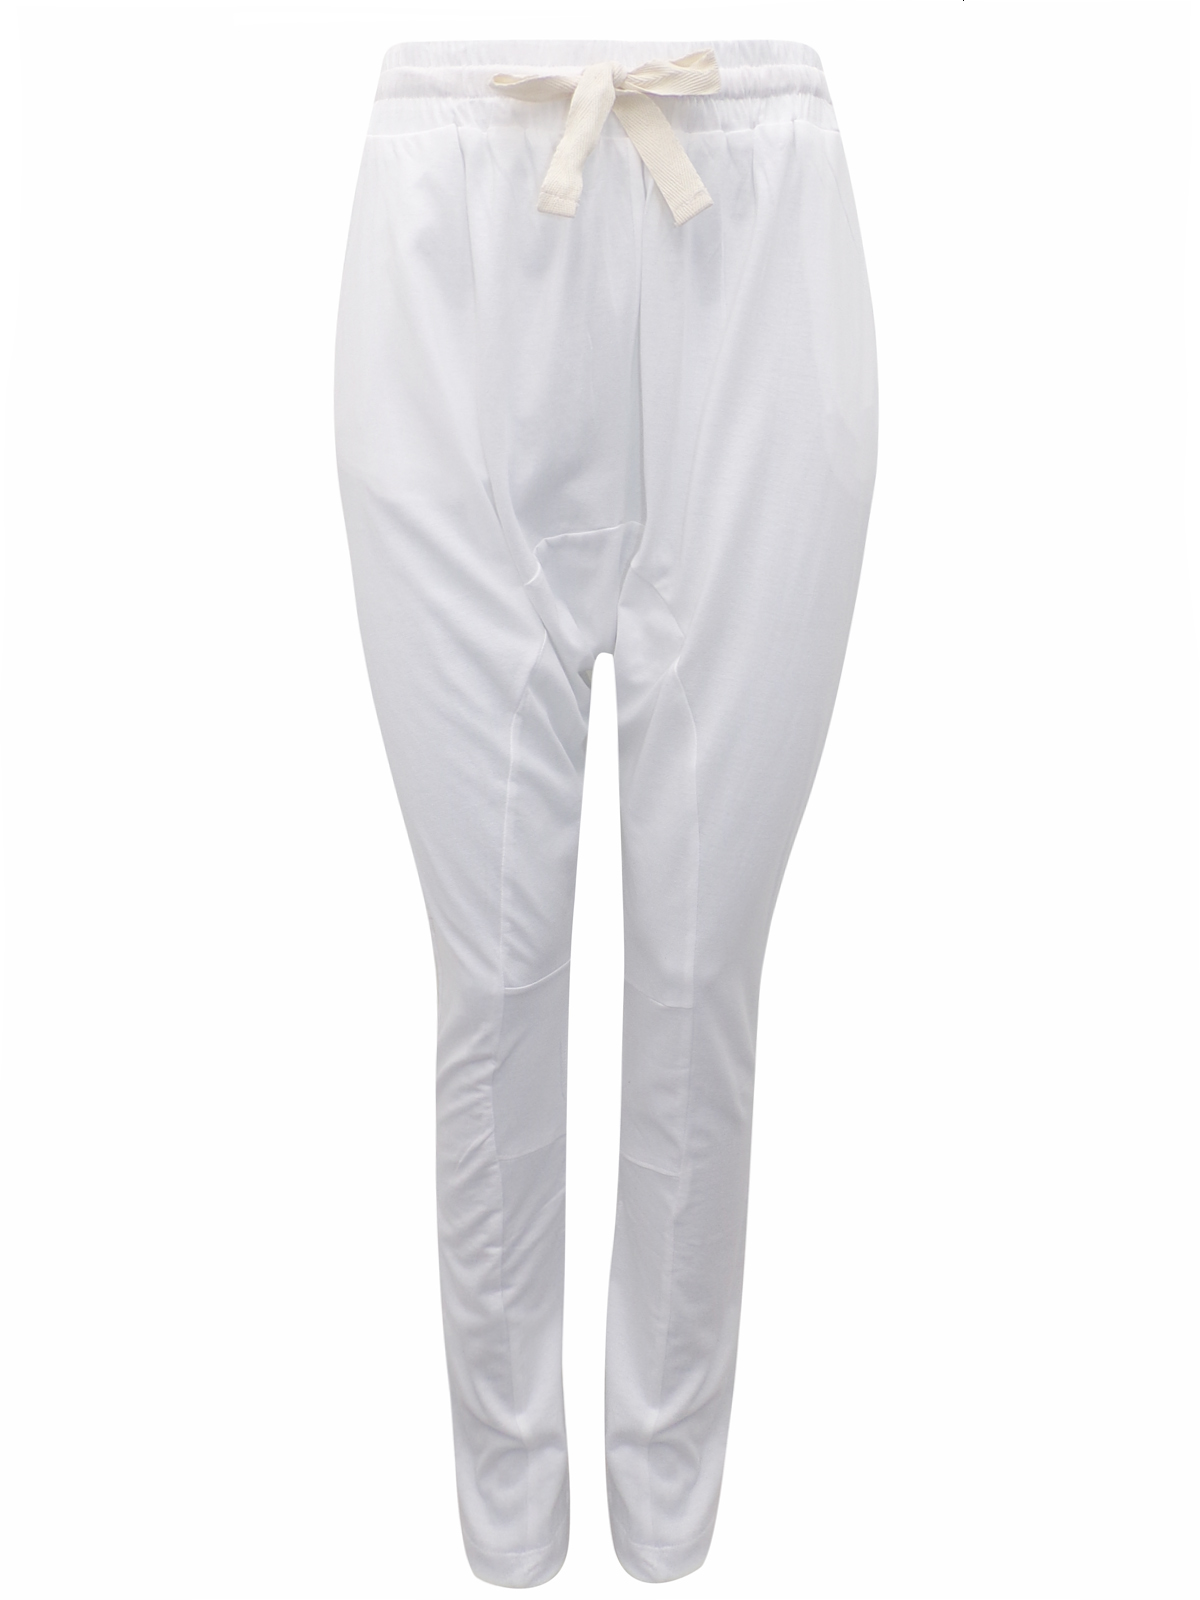 Cloth & Co - - Cloth&Co WHITE Organic Cotton Lounge Pants - Size 10 to ...